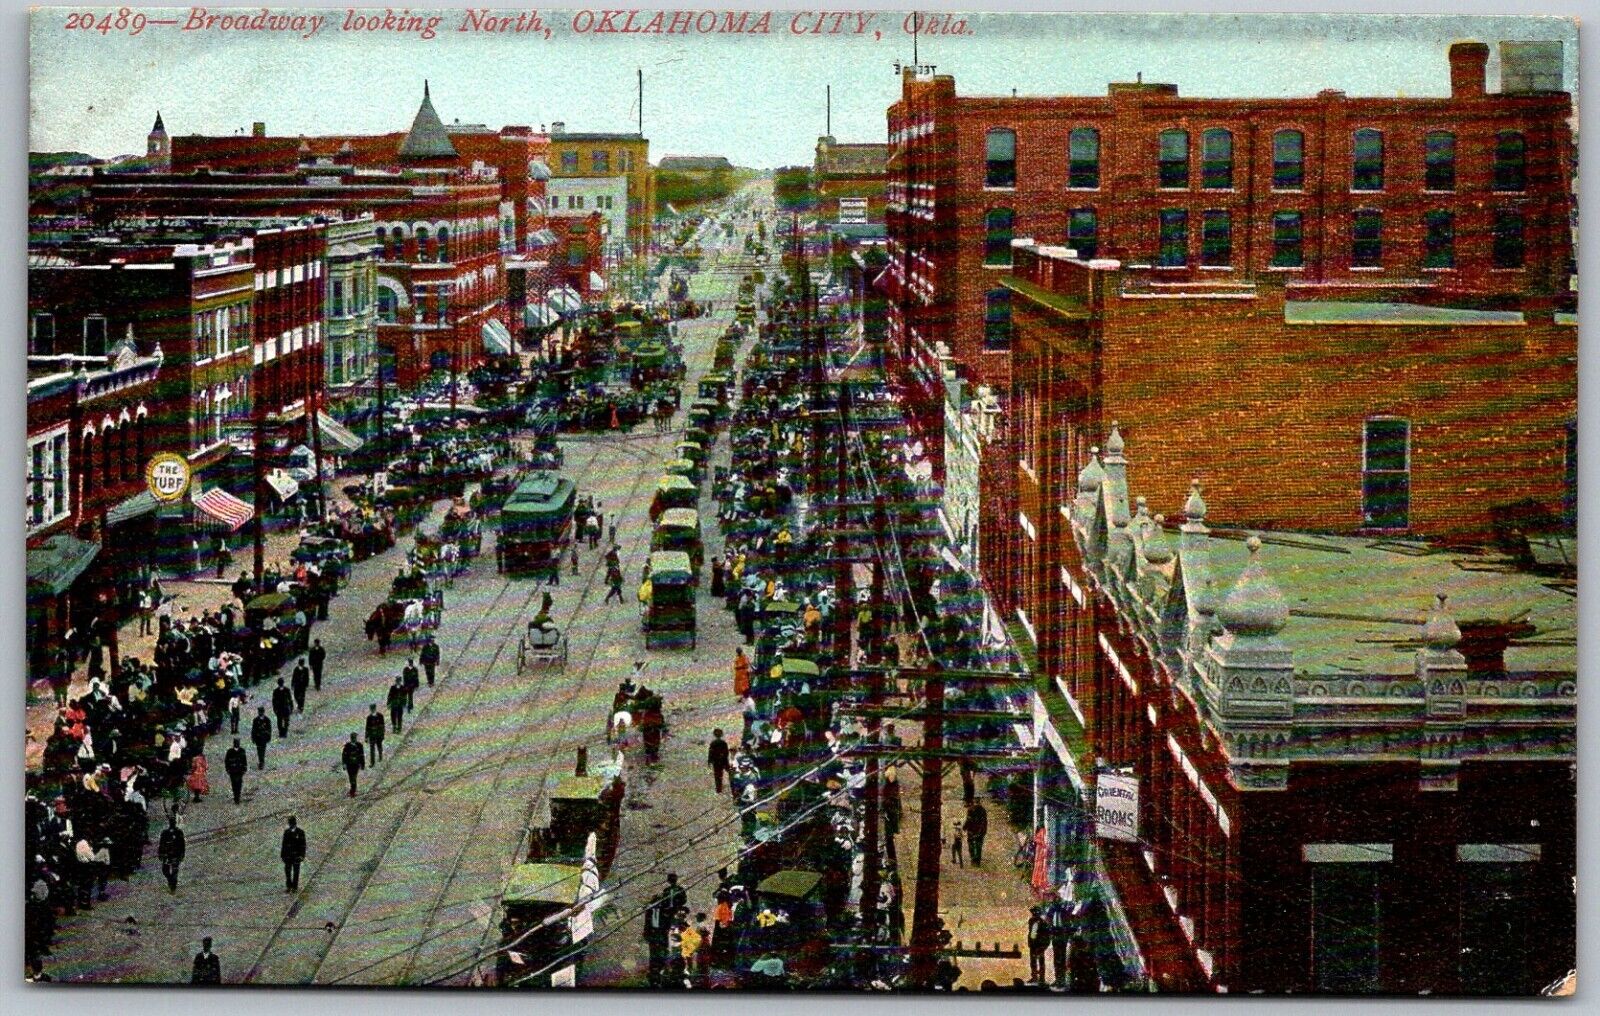 Oklahoma City Oklahoma 1909 Postcard Broadway Looking North Circus Day Parade